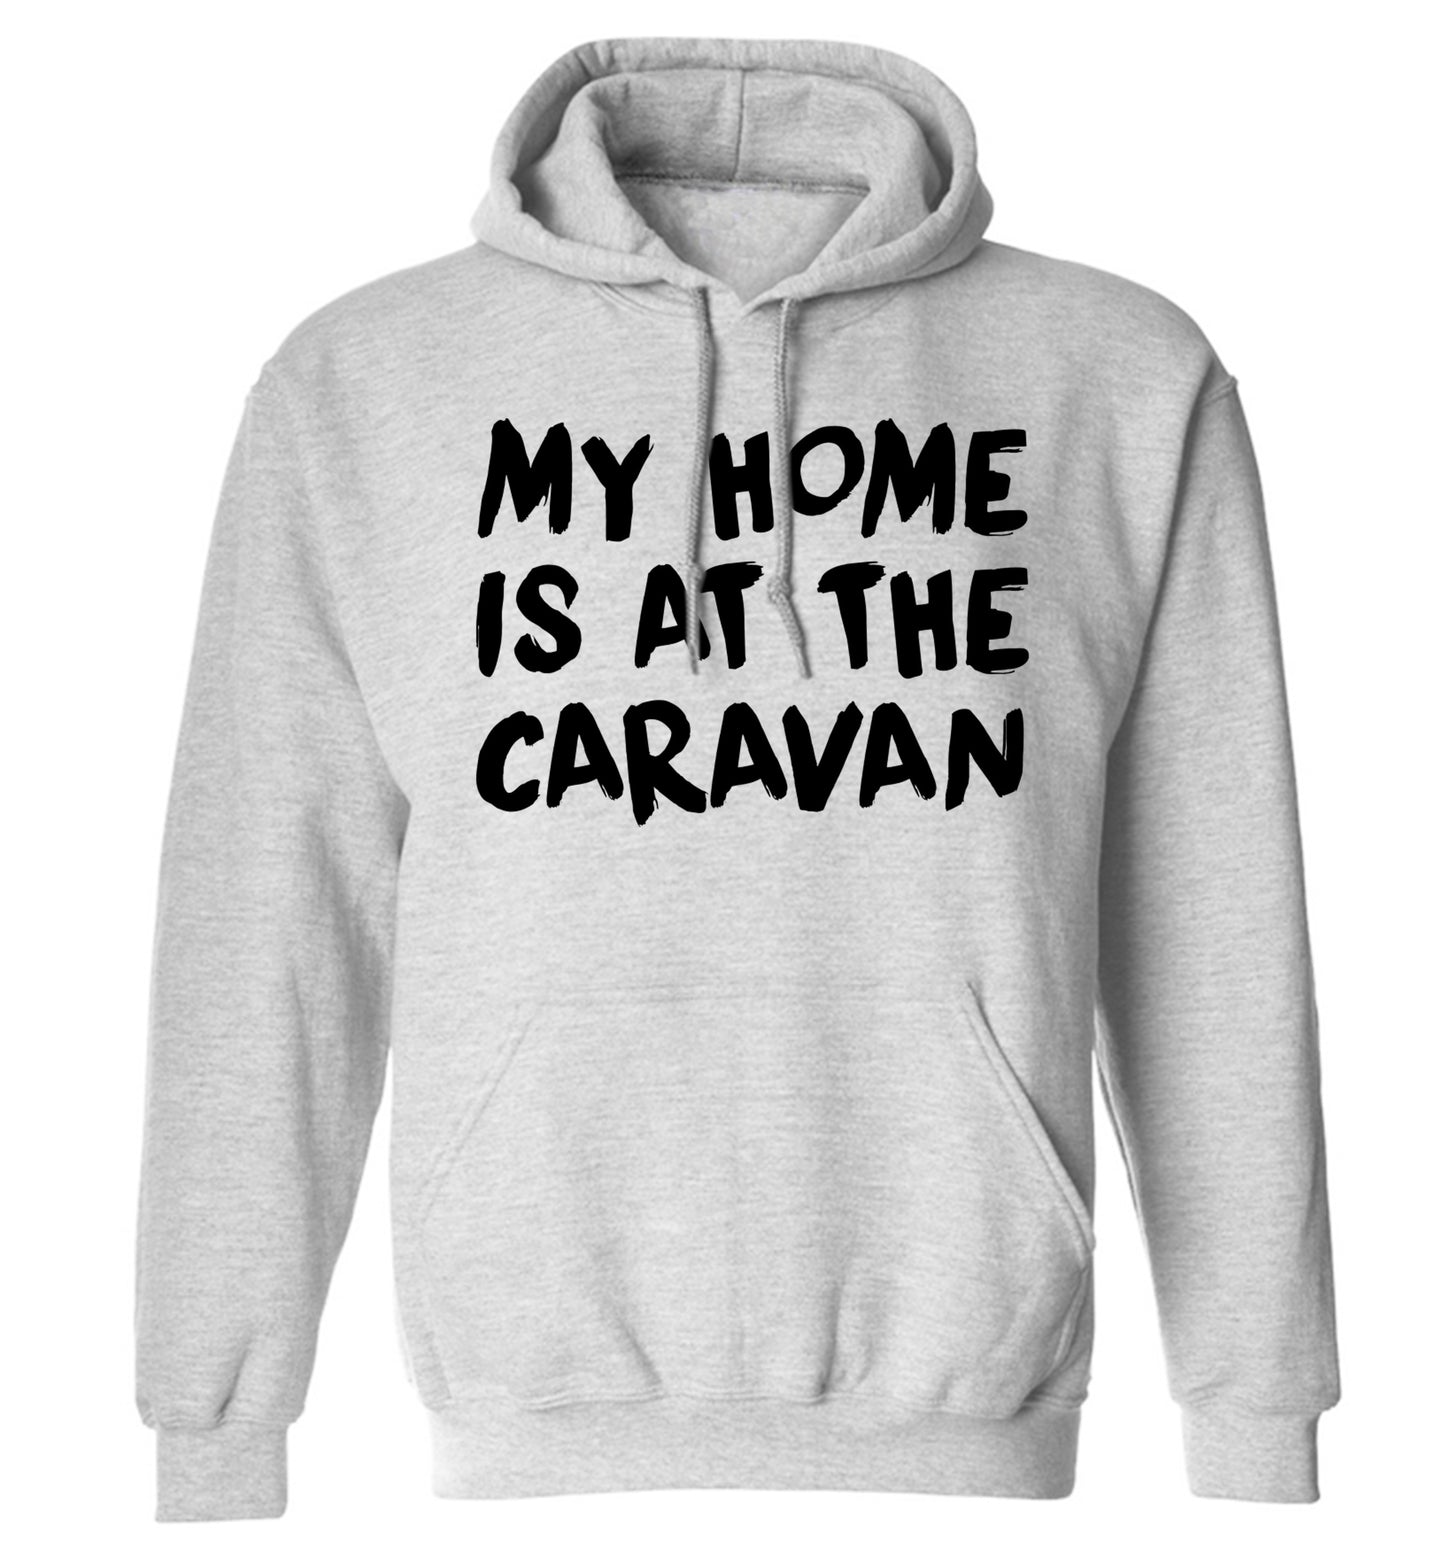 My home is at the caravan adults unisex grey hoodie 2XL